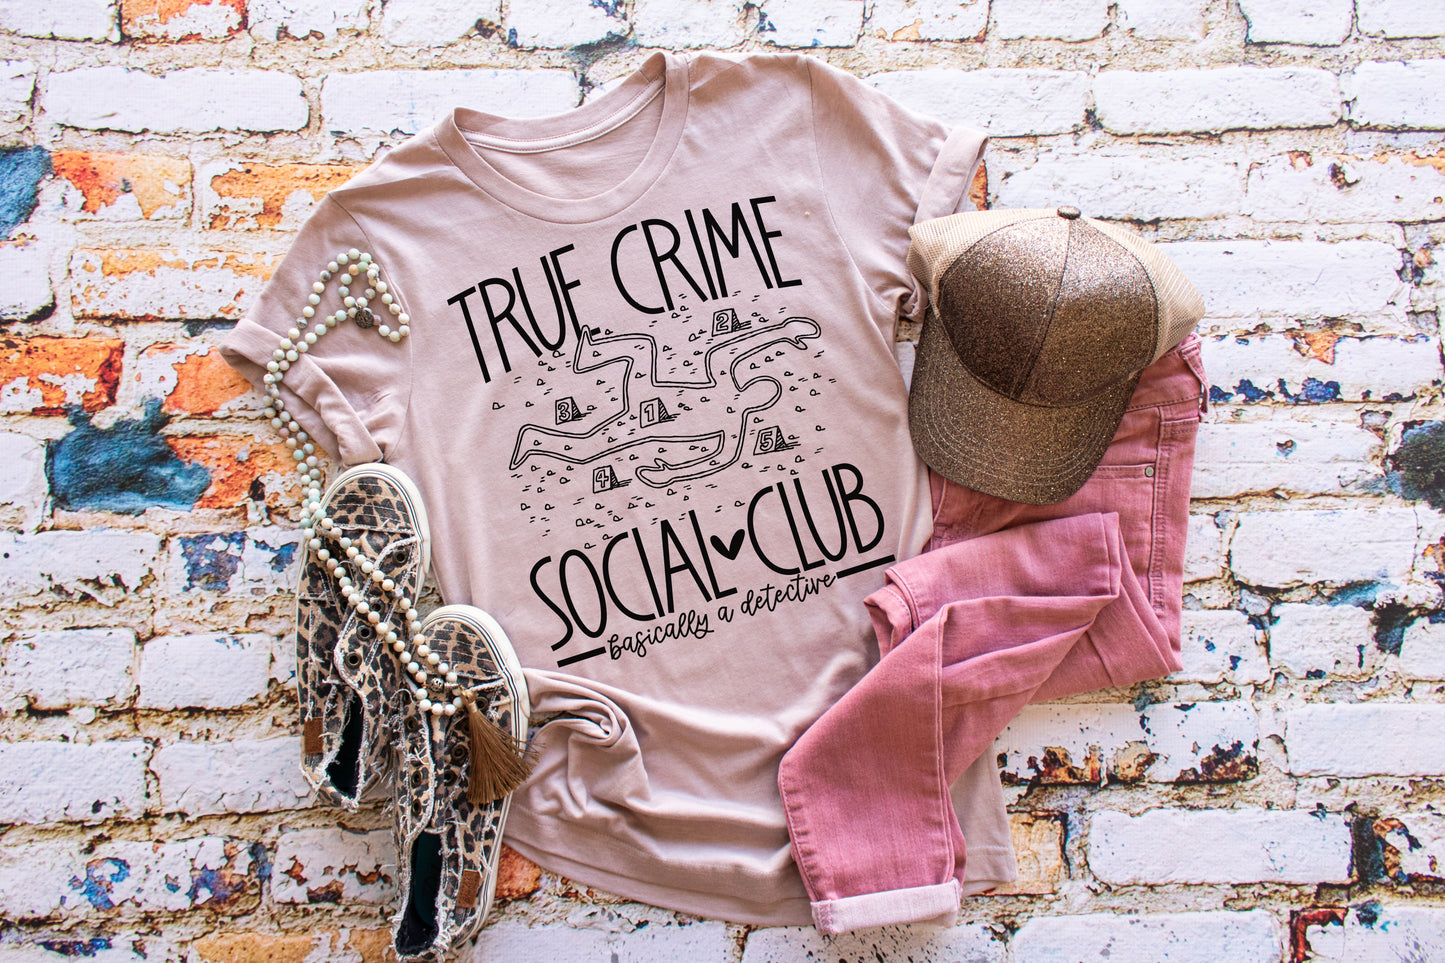 True crime social club